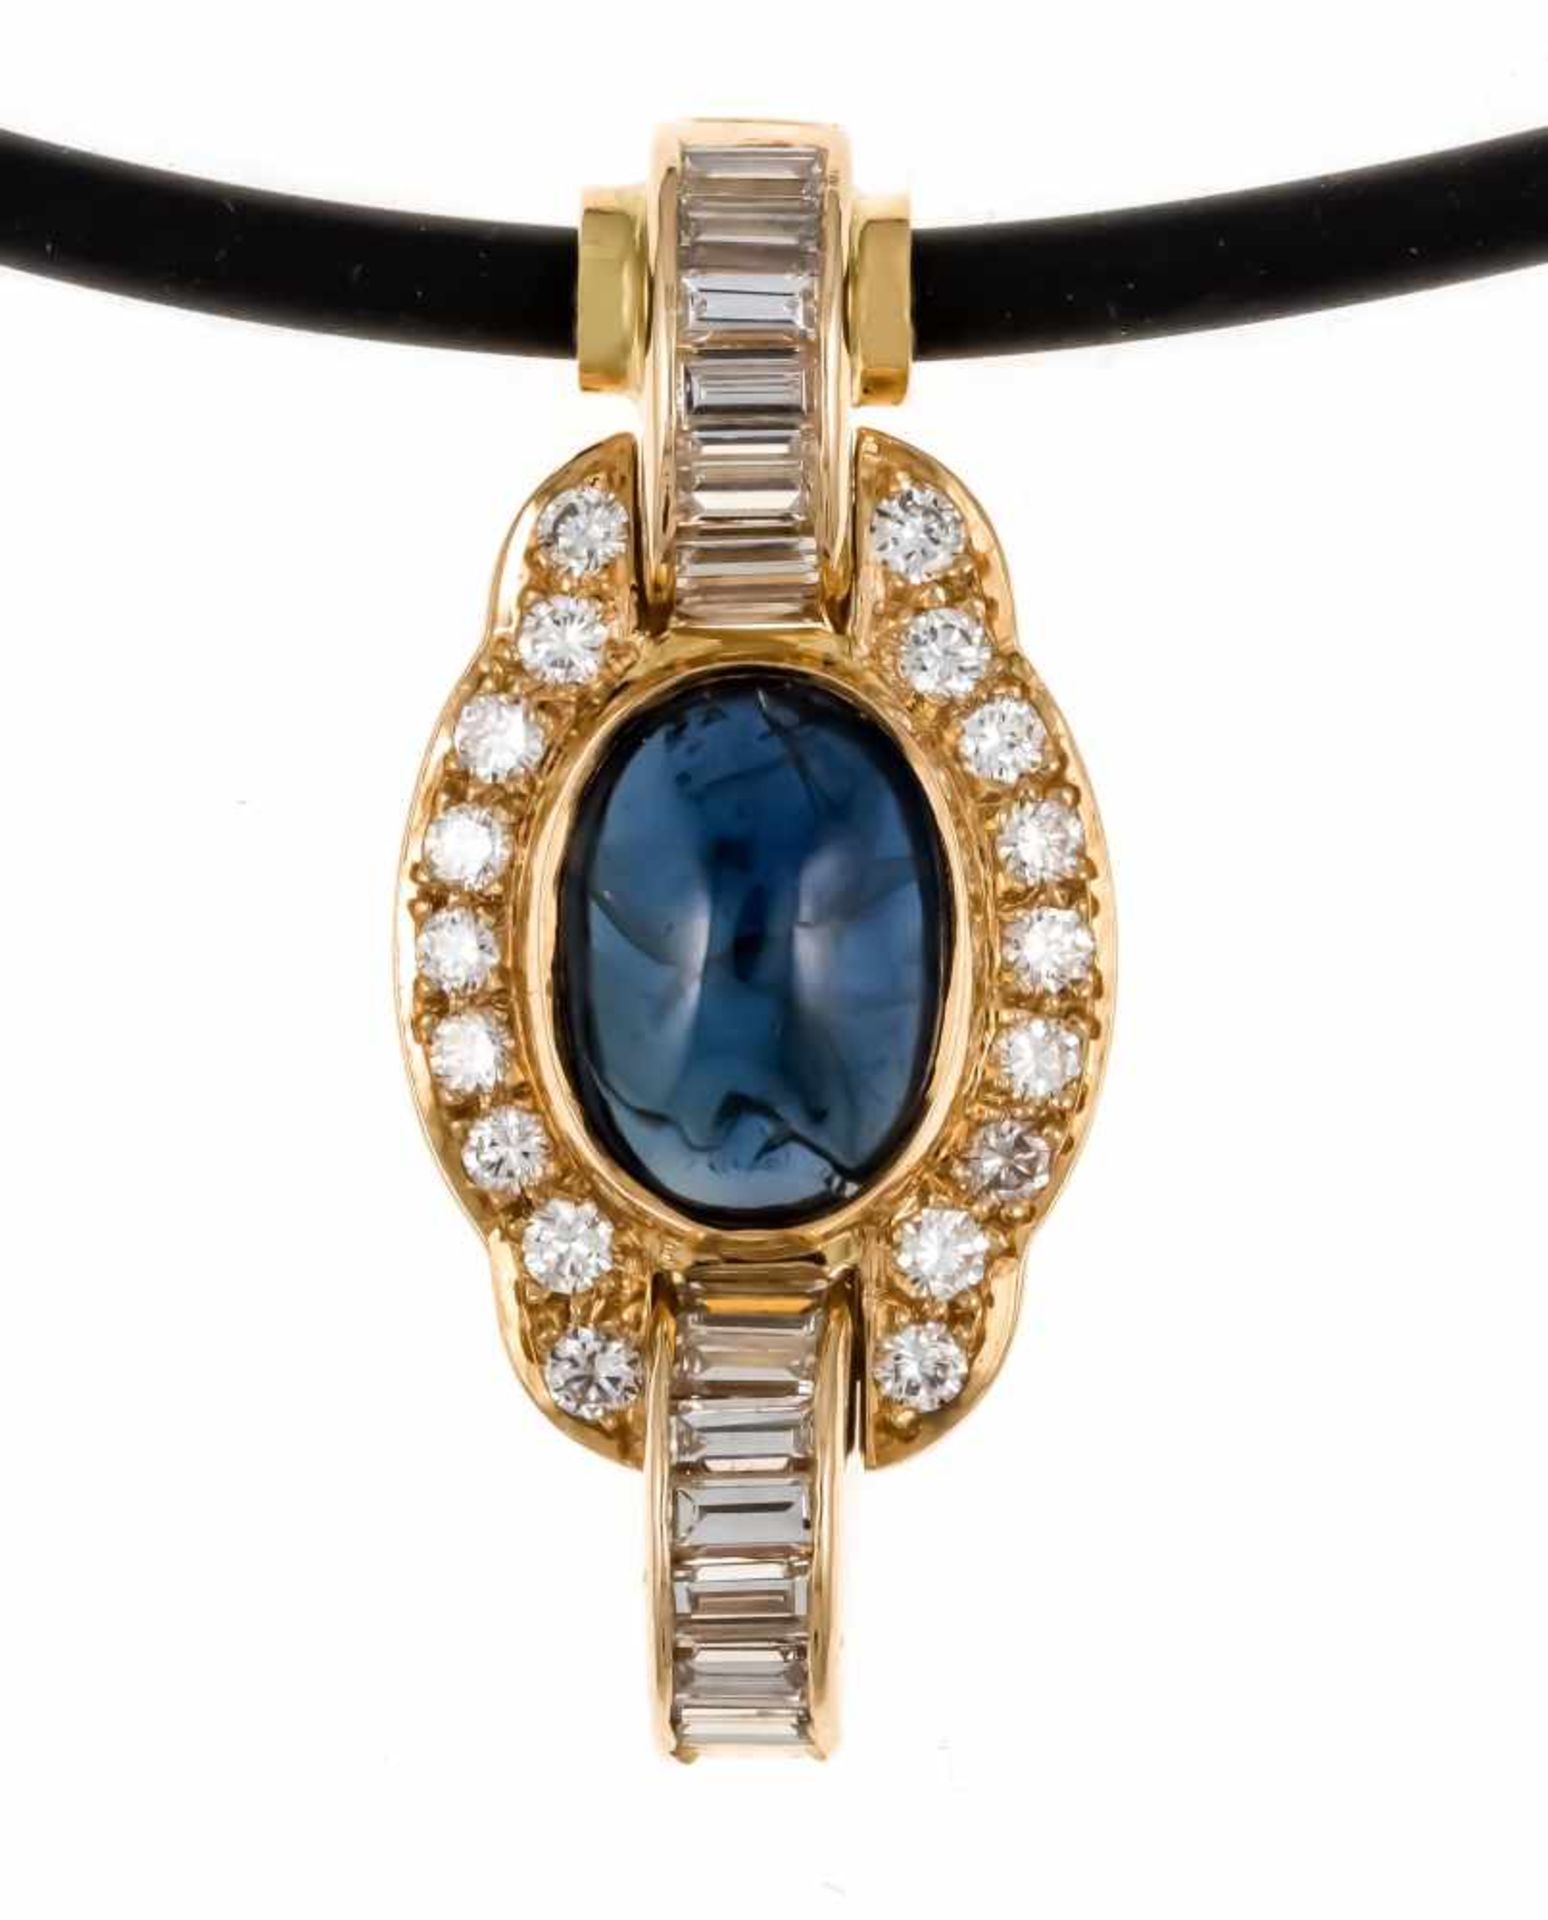 Sapphire-brilliant pendant GG 750/000 with a fine sapphire cabochon 9 x 7 mm in very goodcolor,